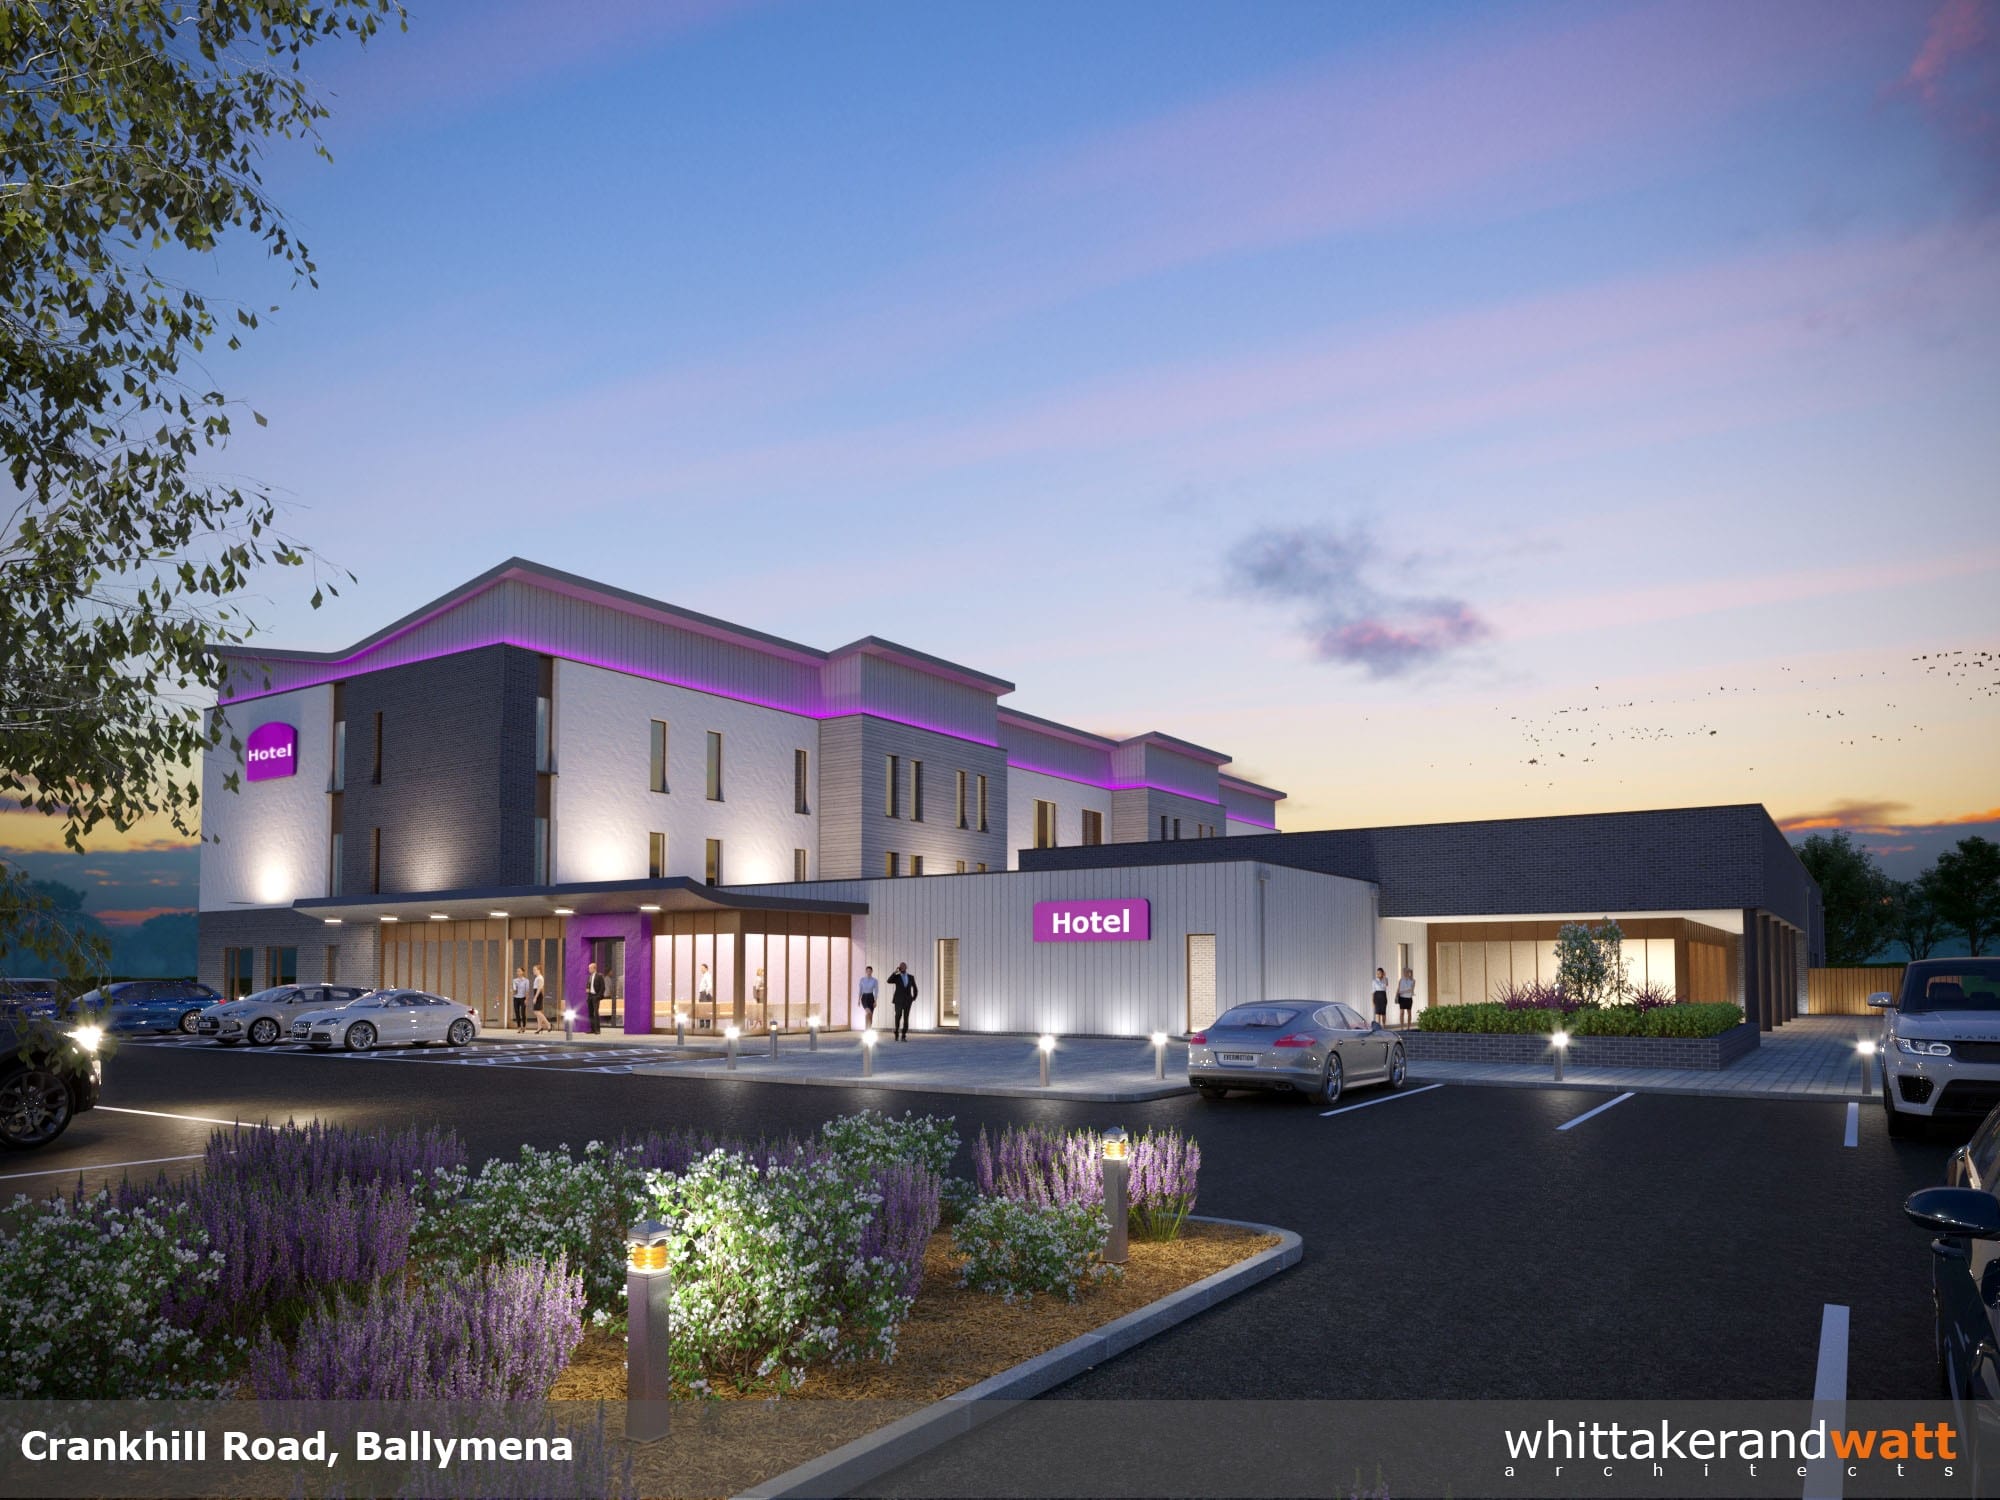 Green light sought for new mid-Antrim hotel